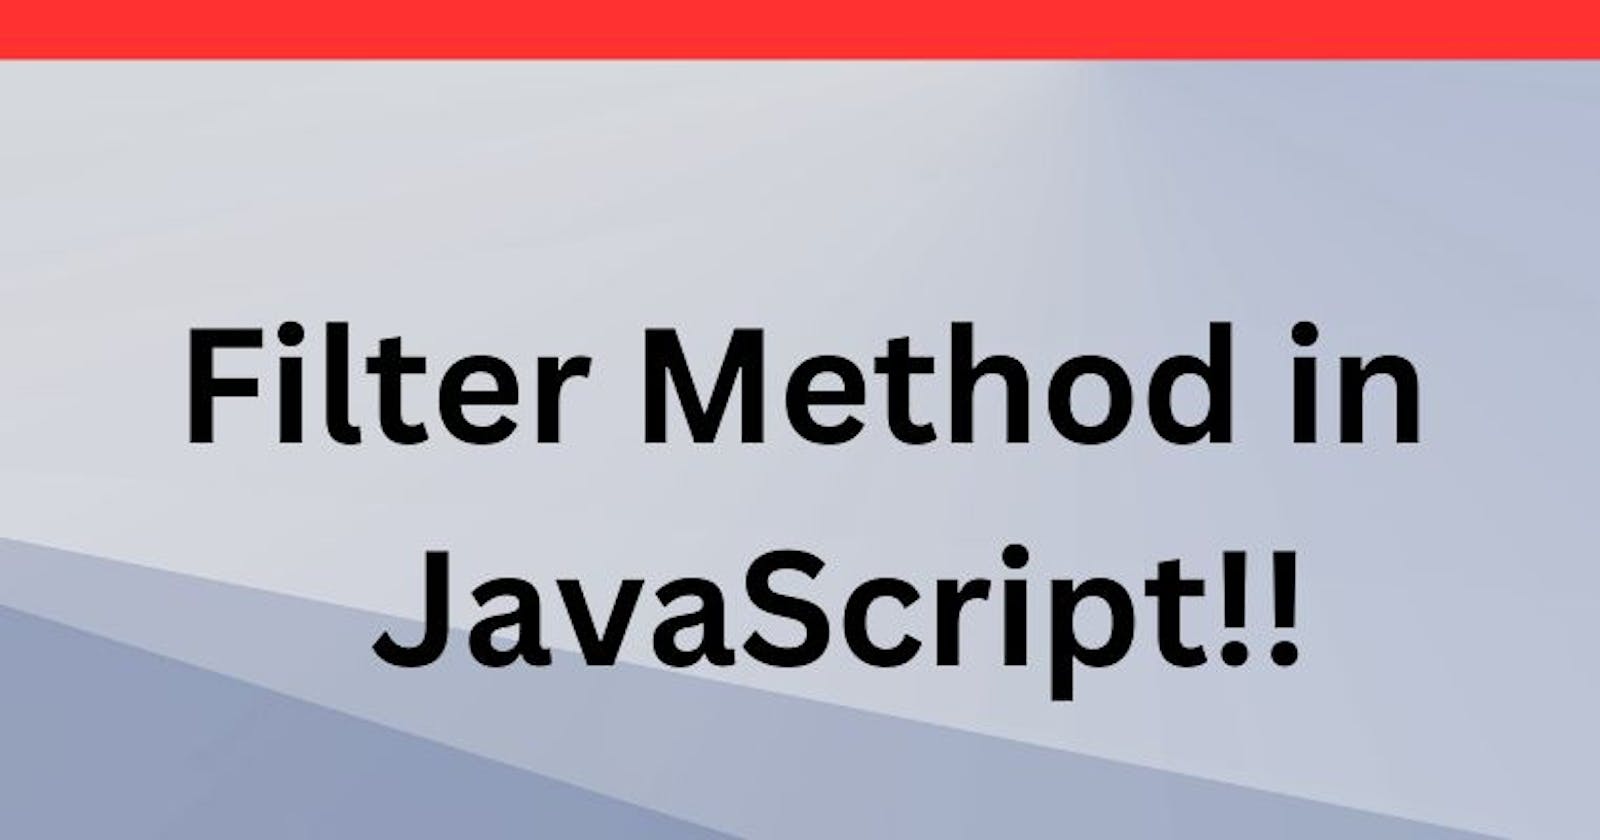 Filter Method in JavaScript